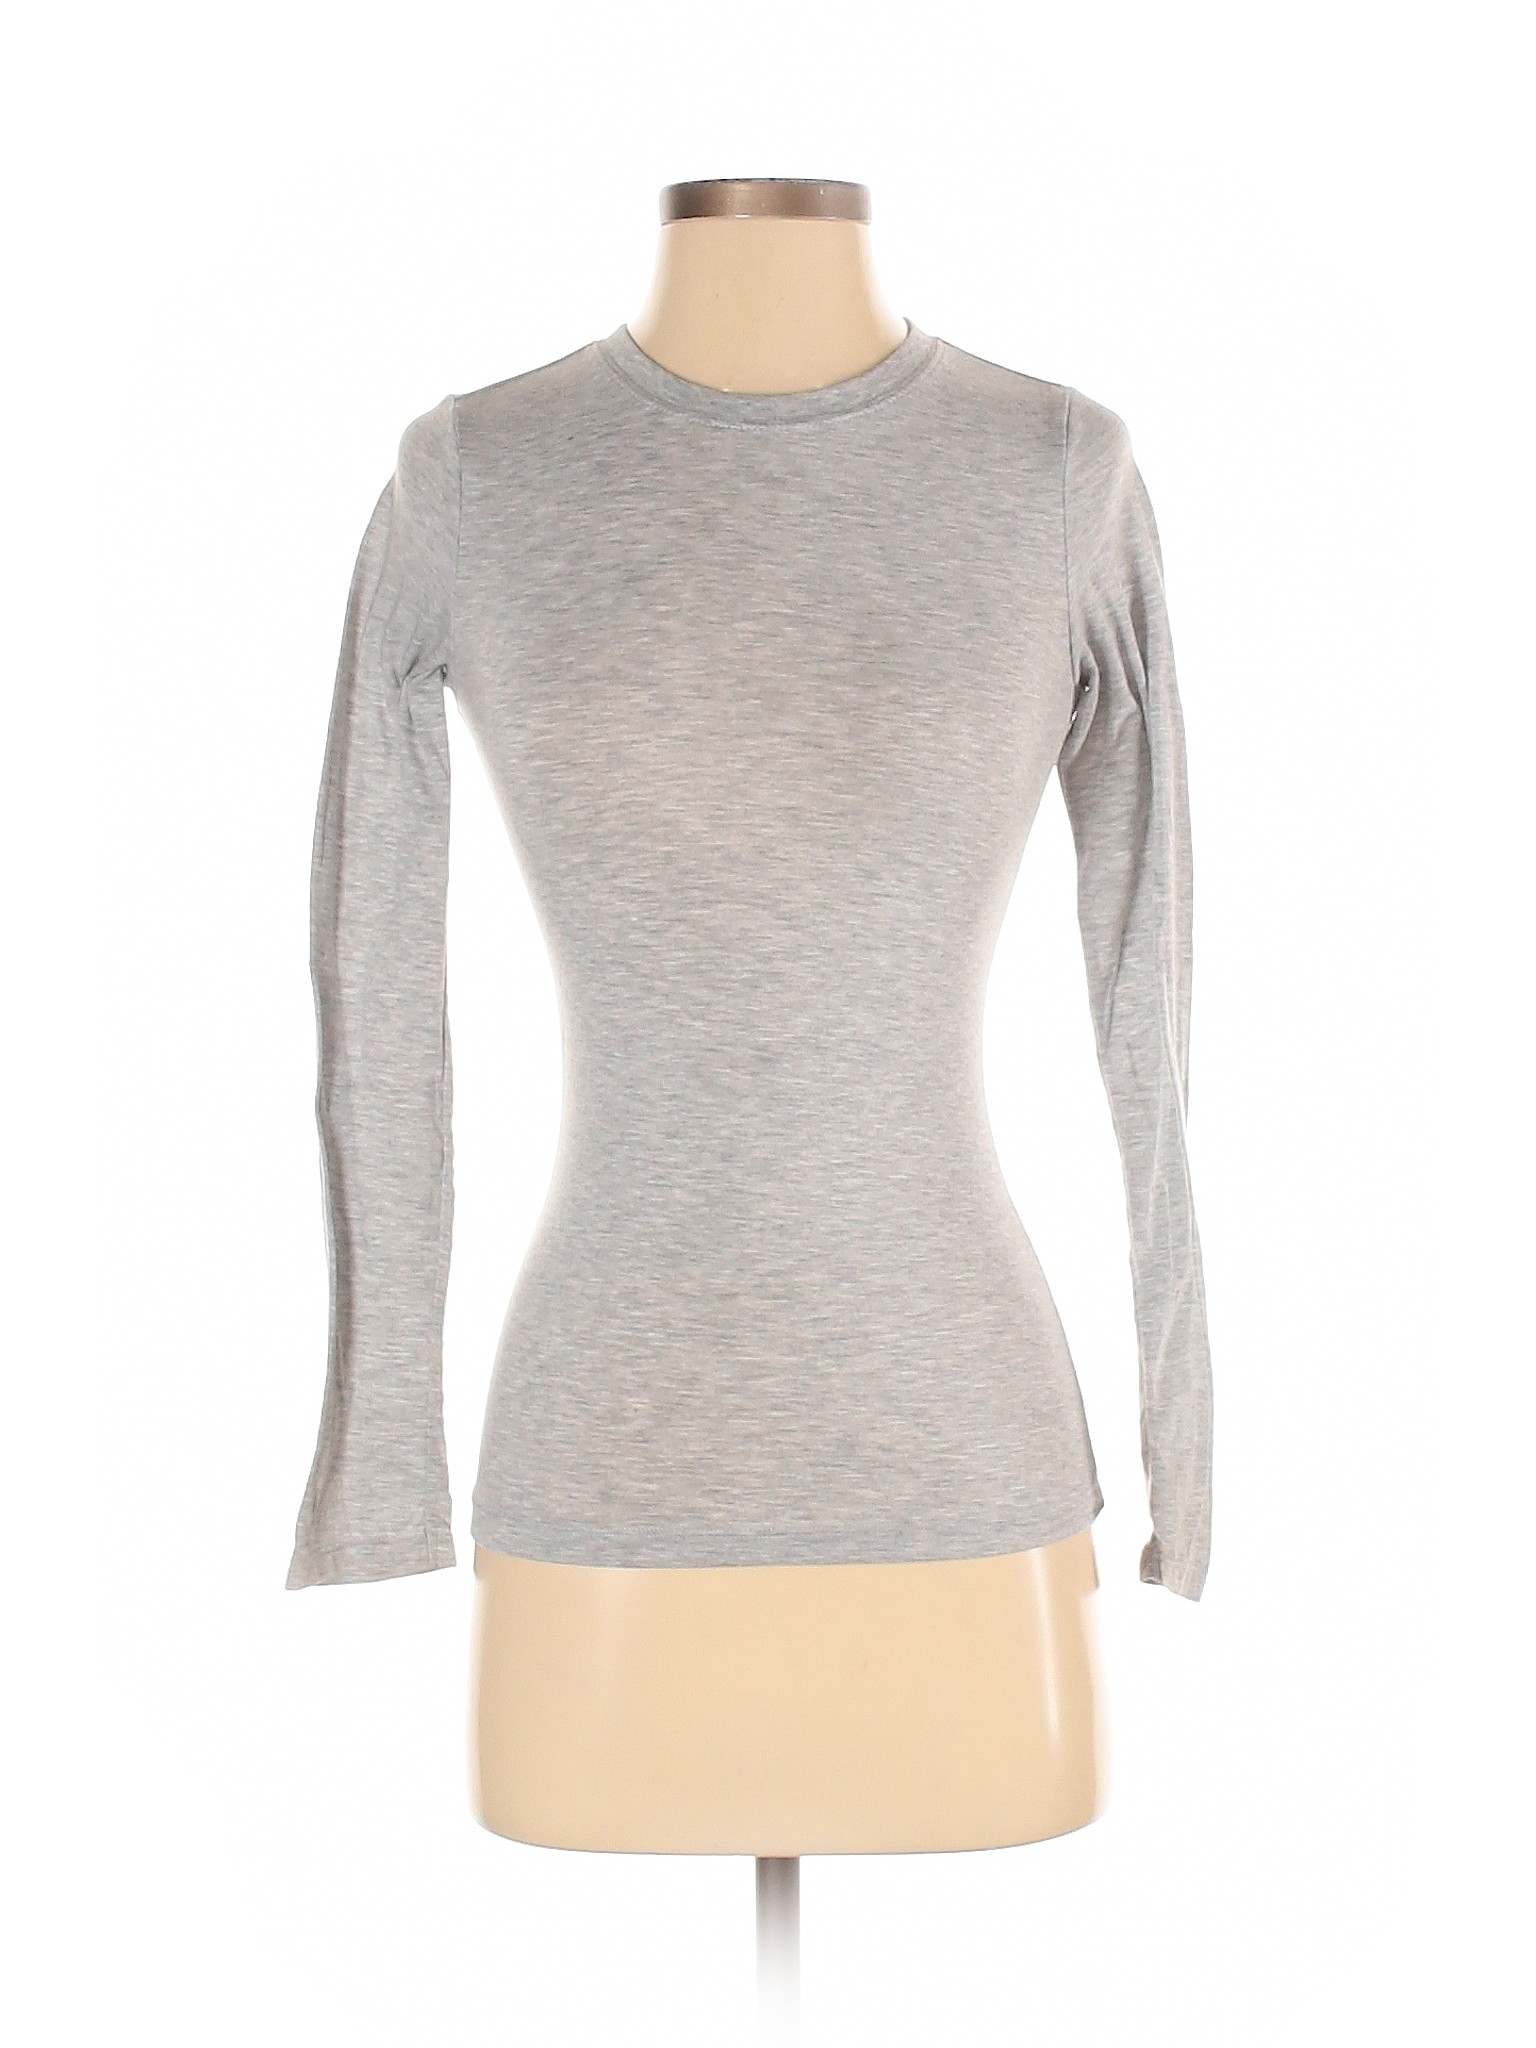 Ambiance Apparel Women Gray Long Sleeve T-Shirt S | eBay